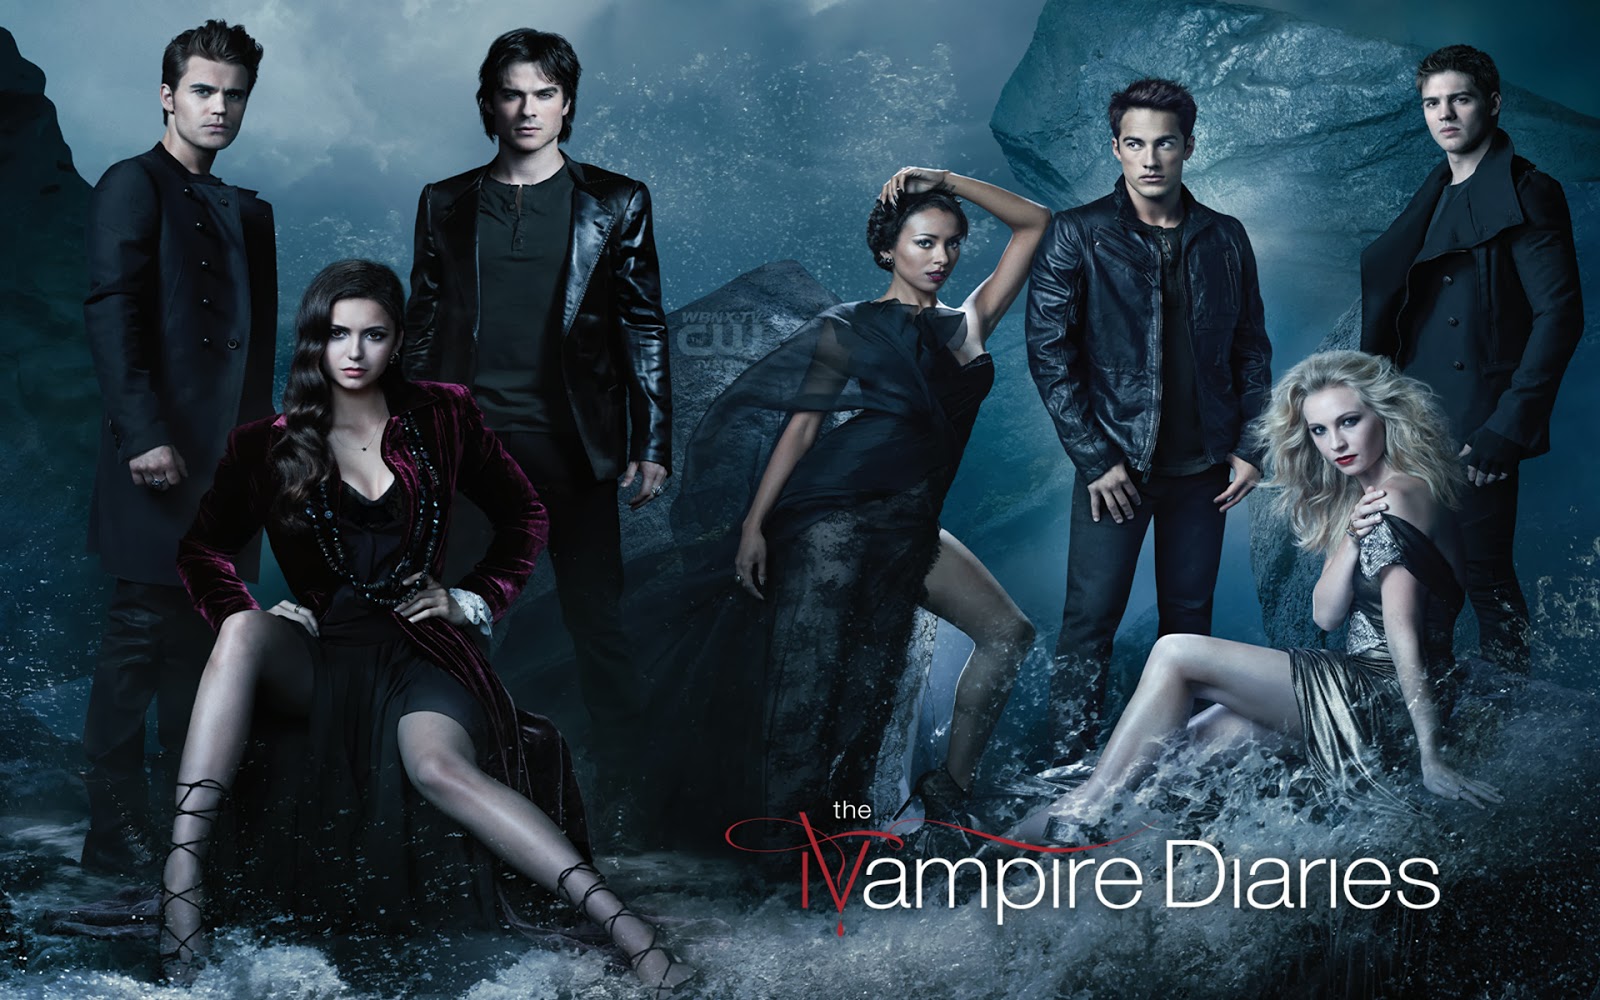 The Vampire Diaries Cast Wallpaper Hiresmoall